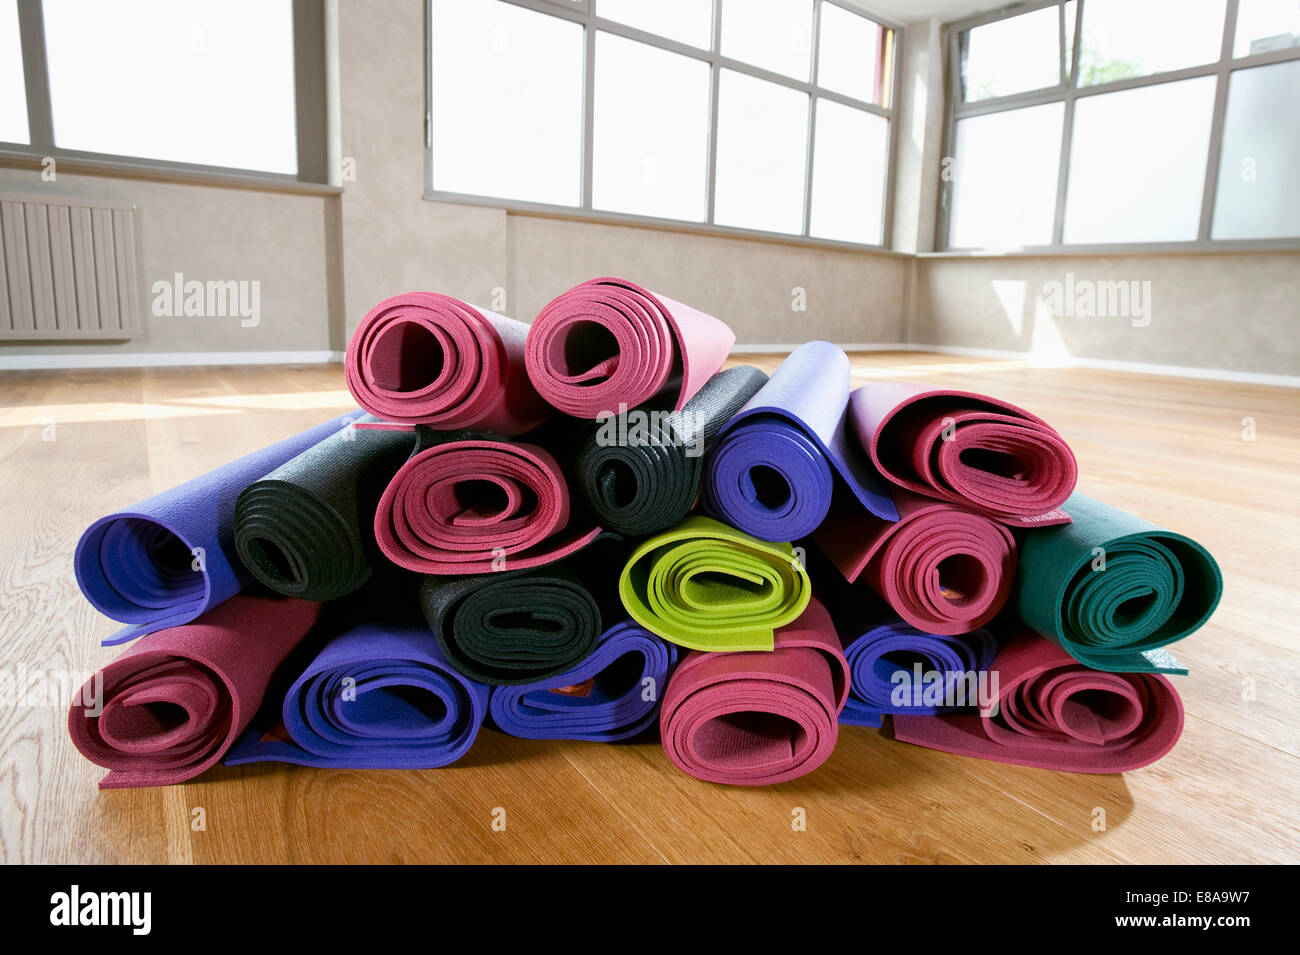 Premium Photo  Cozy empty yoga studio with green mat and sports equipment